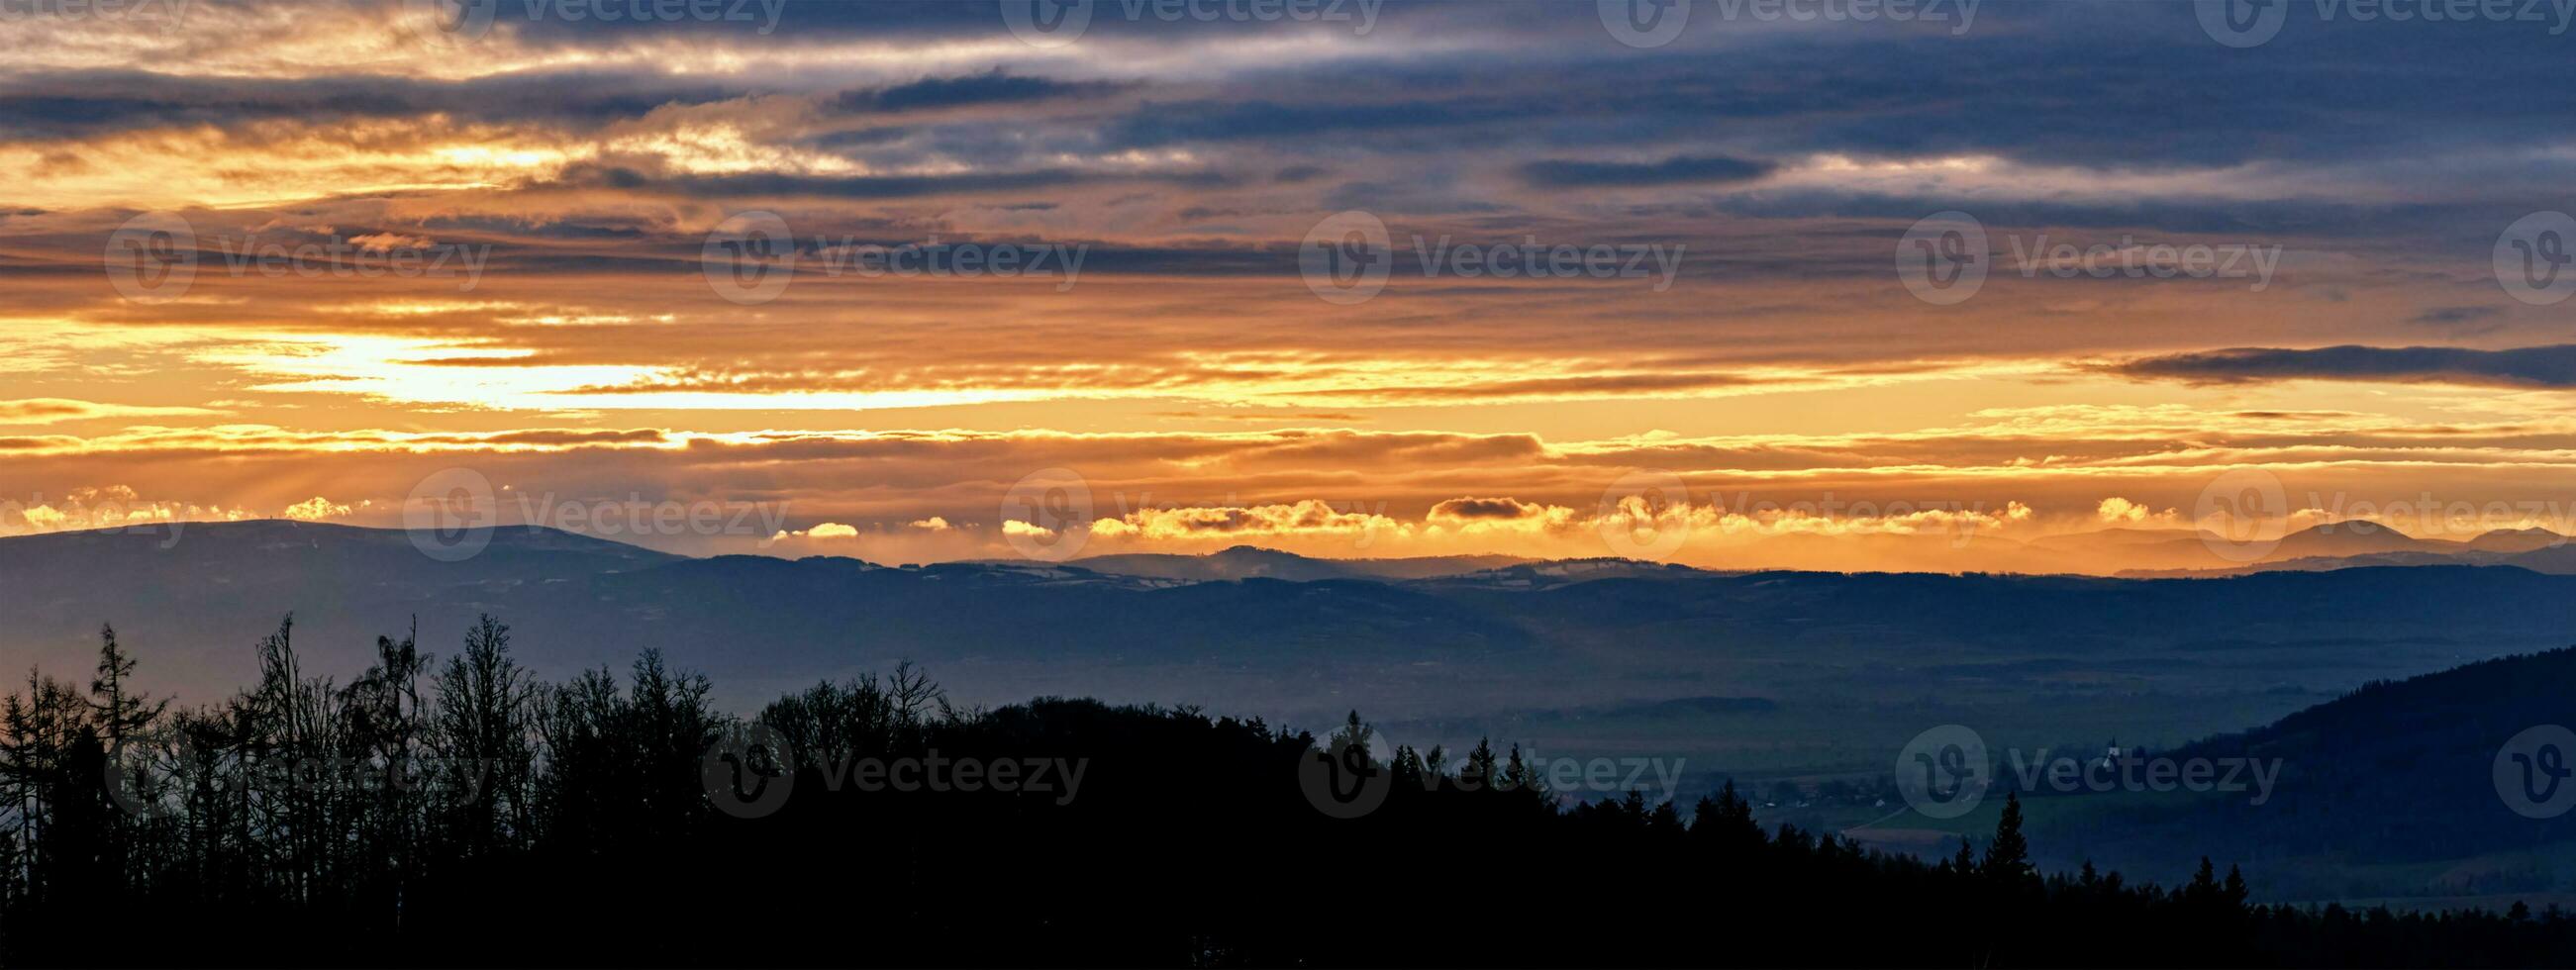 Sunset dramatic sky over mountains shape photo